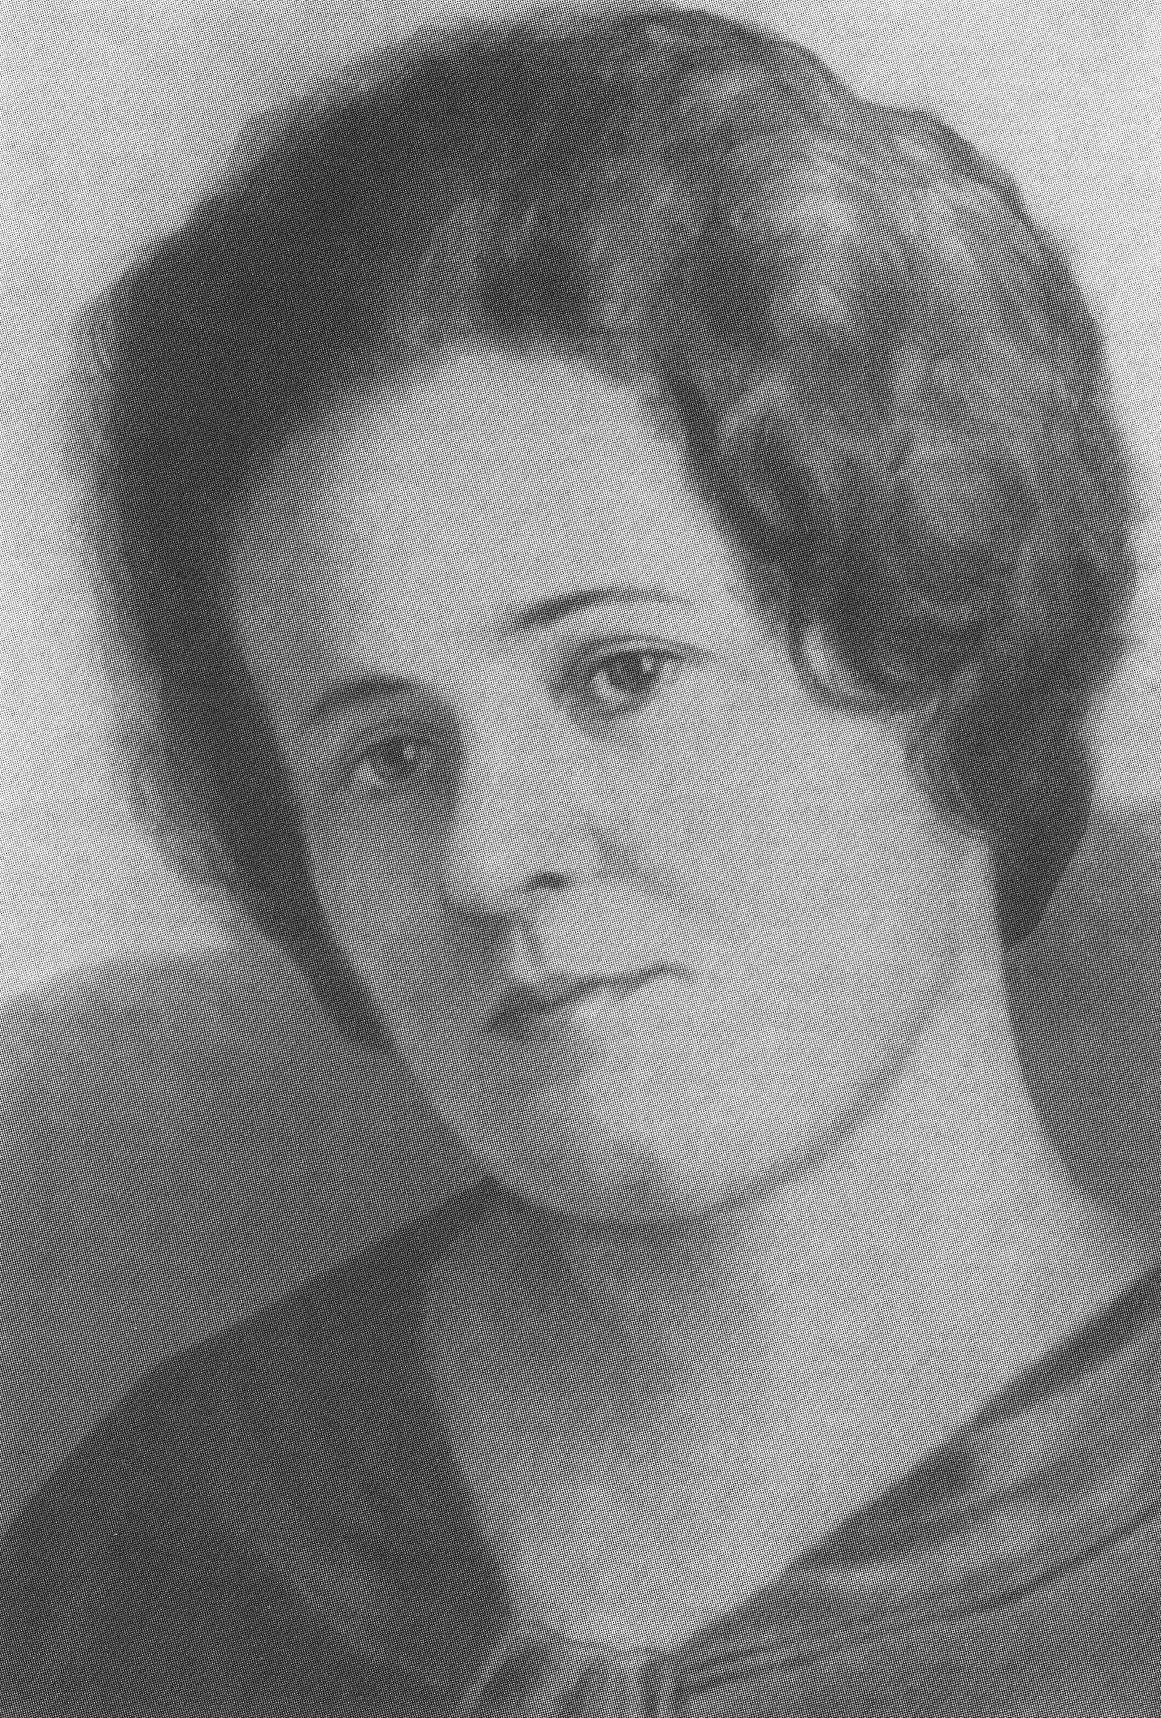 Нина Николаевна Миронова (1894—1975)